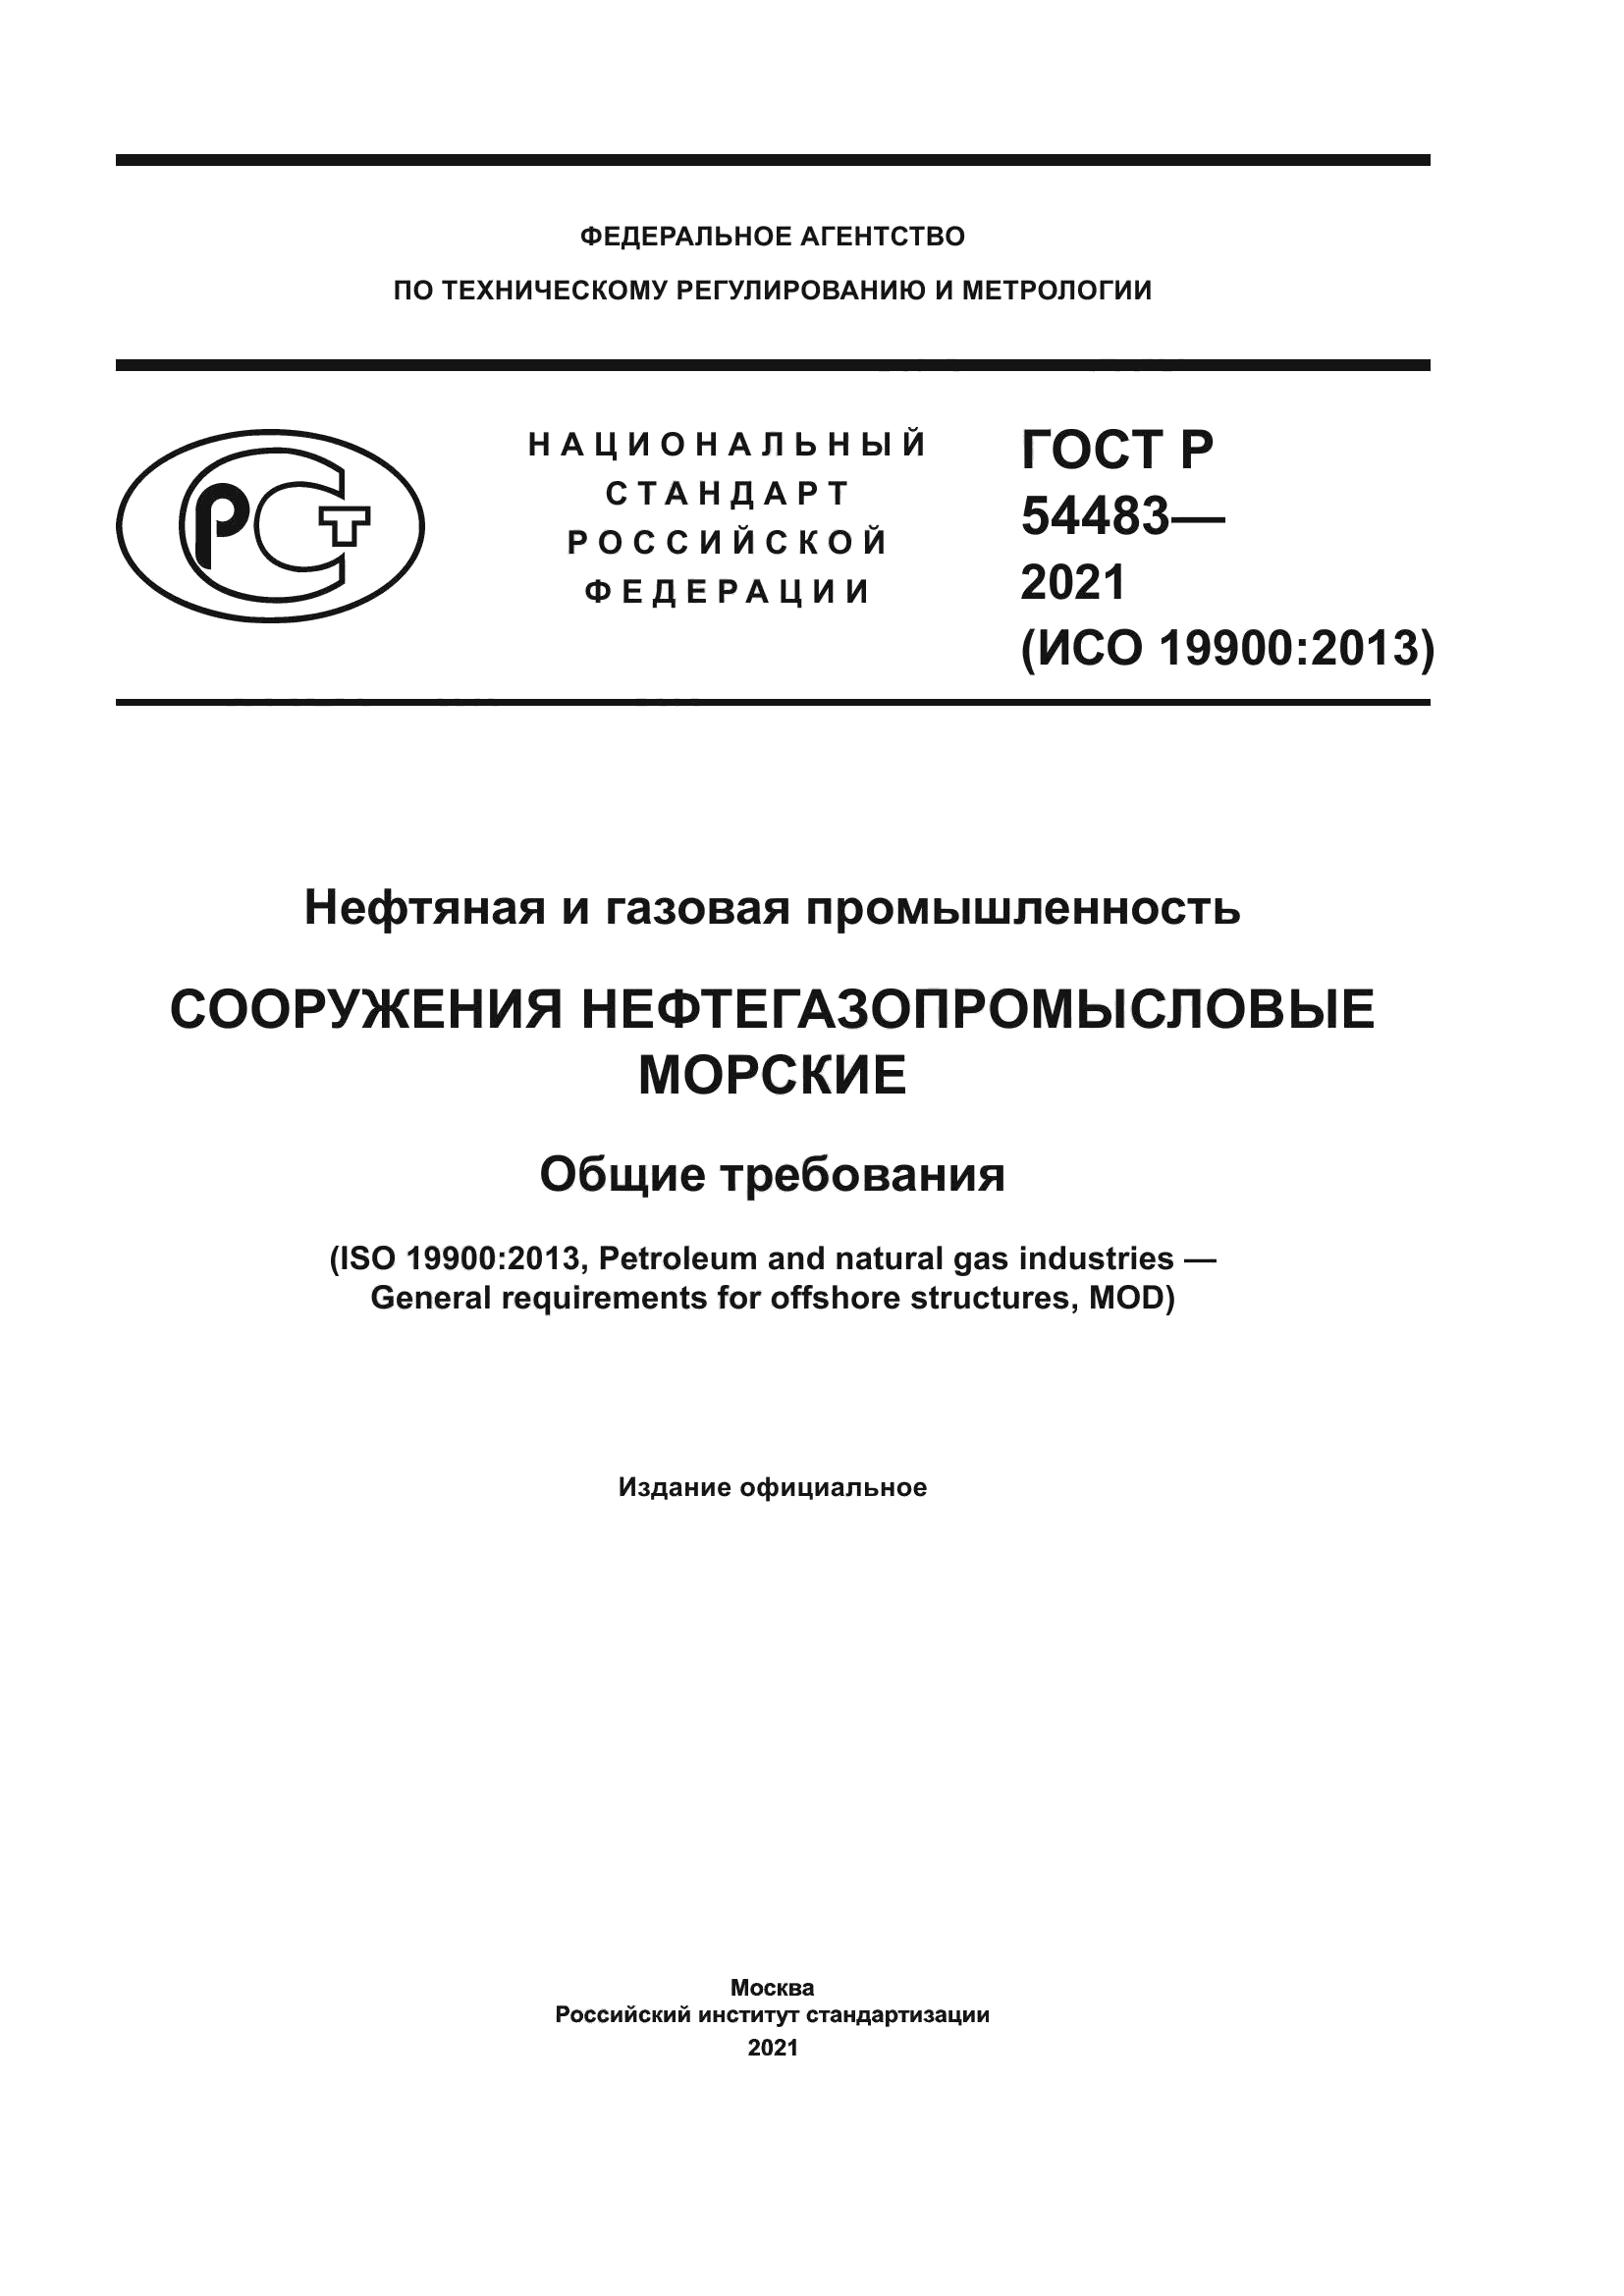 ГОСТ Р 54483-2021